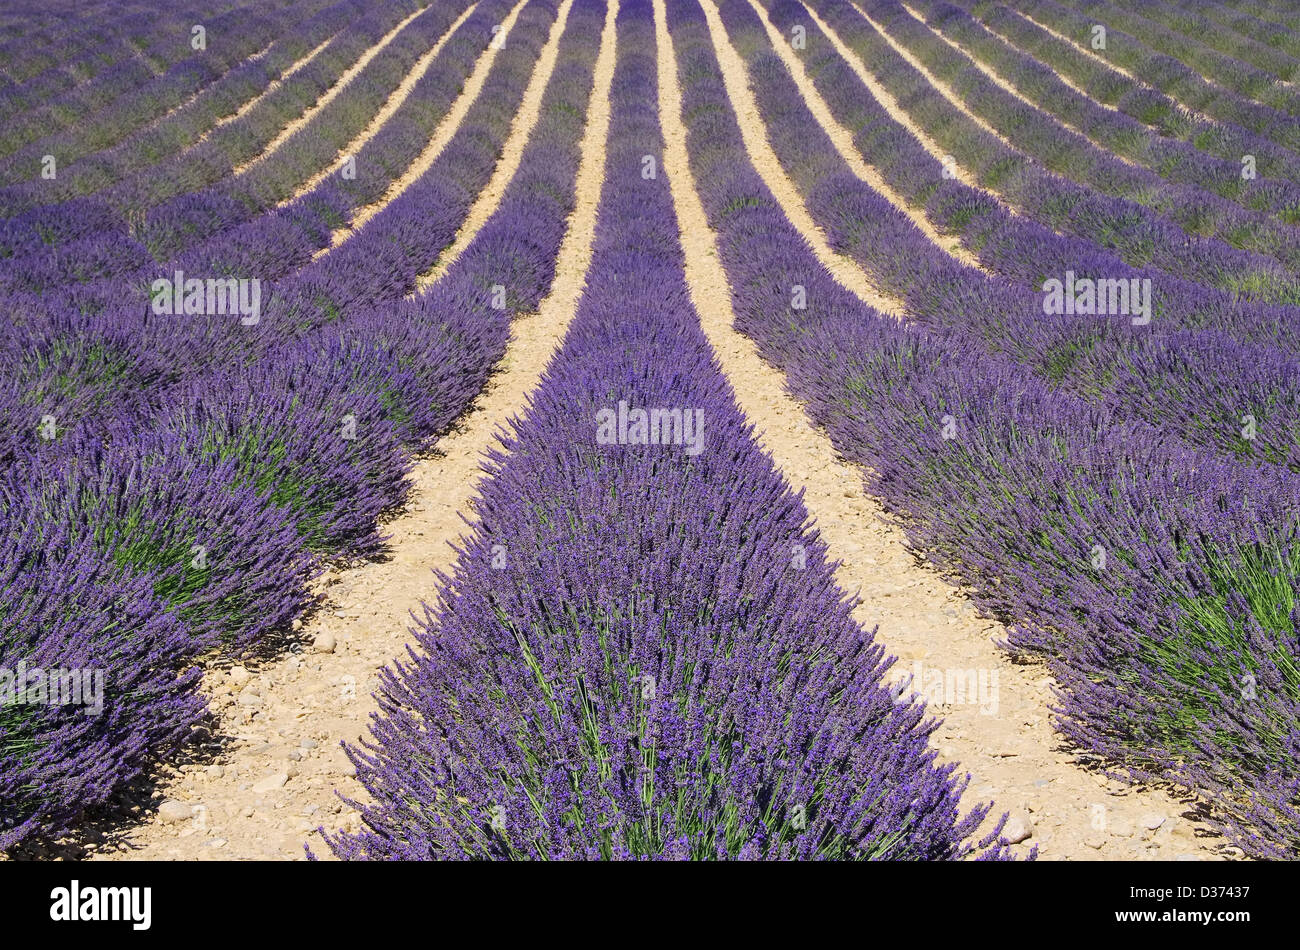 Lavendelfeld - lavender field 61 Stock Photo